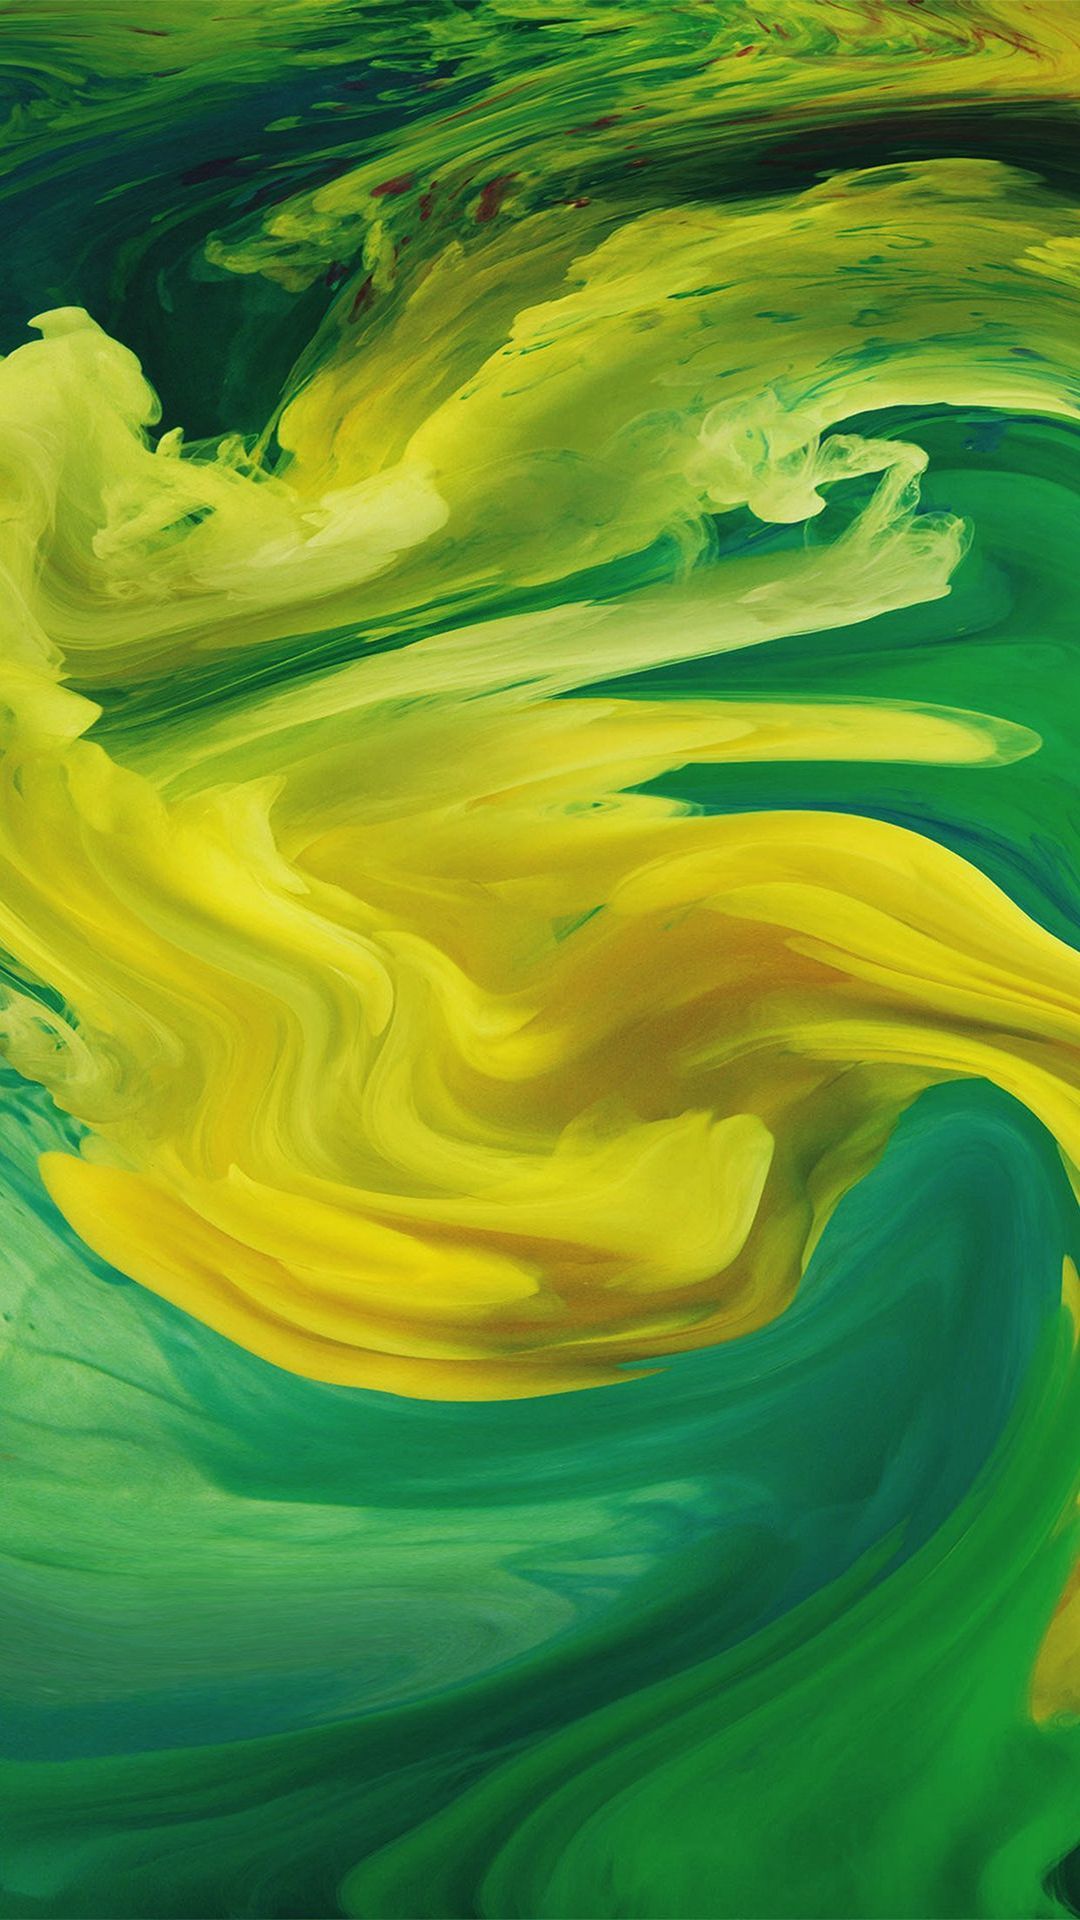 Hurricane Swirl Abstract Art Paint Green Pattern iPhone 6 Wallpaper Download. iPhone Wallpaper, iP. iPhone wallpaper green, Storm wallpaper, iPhone 5s wallpaper